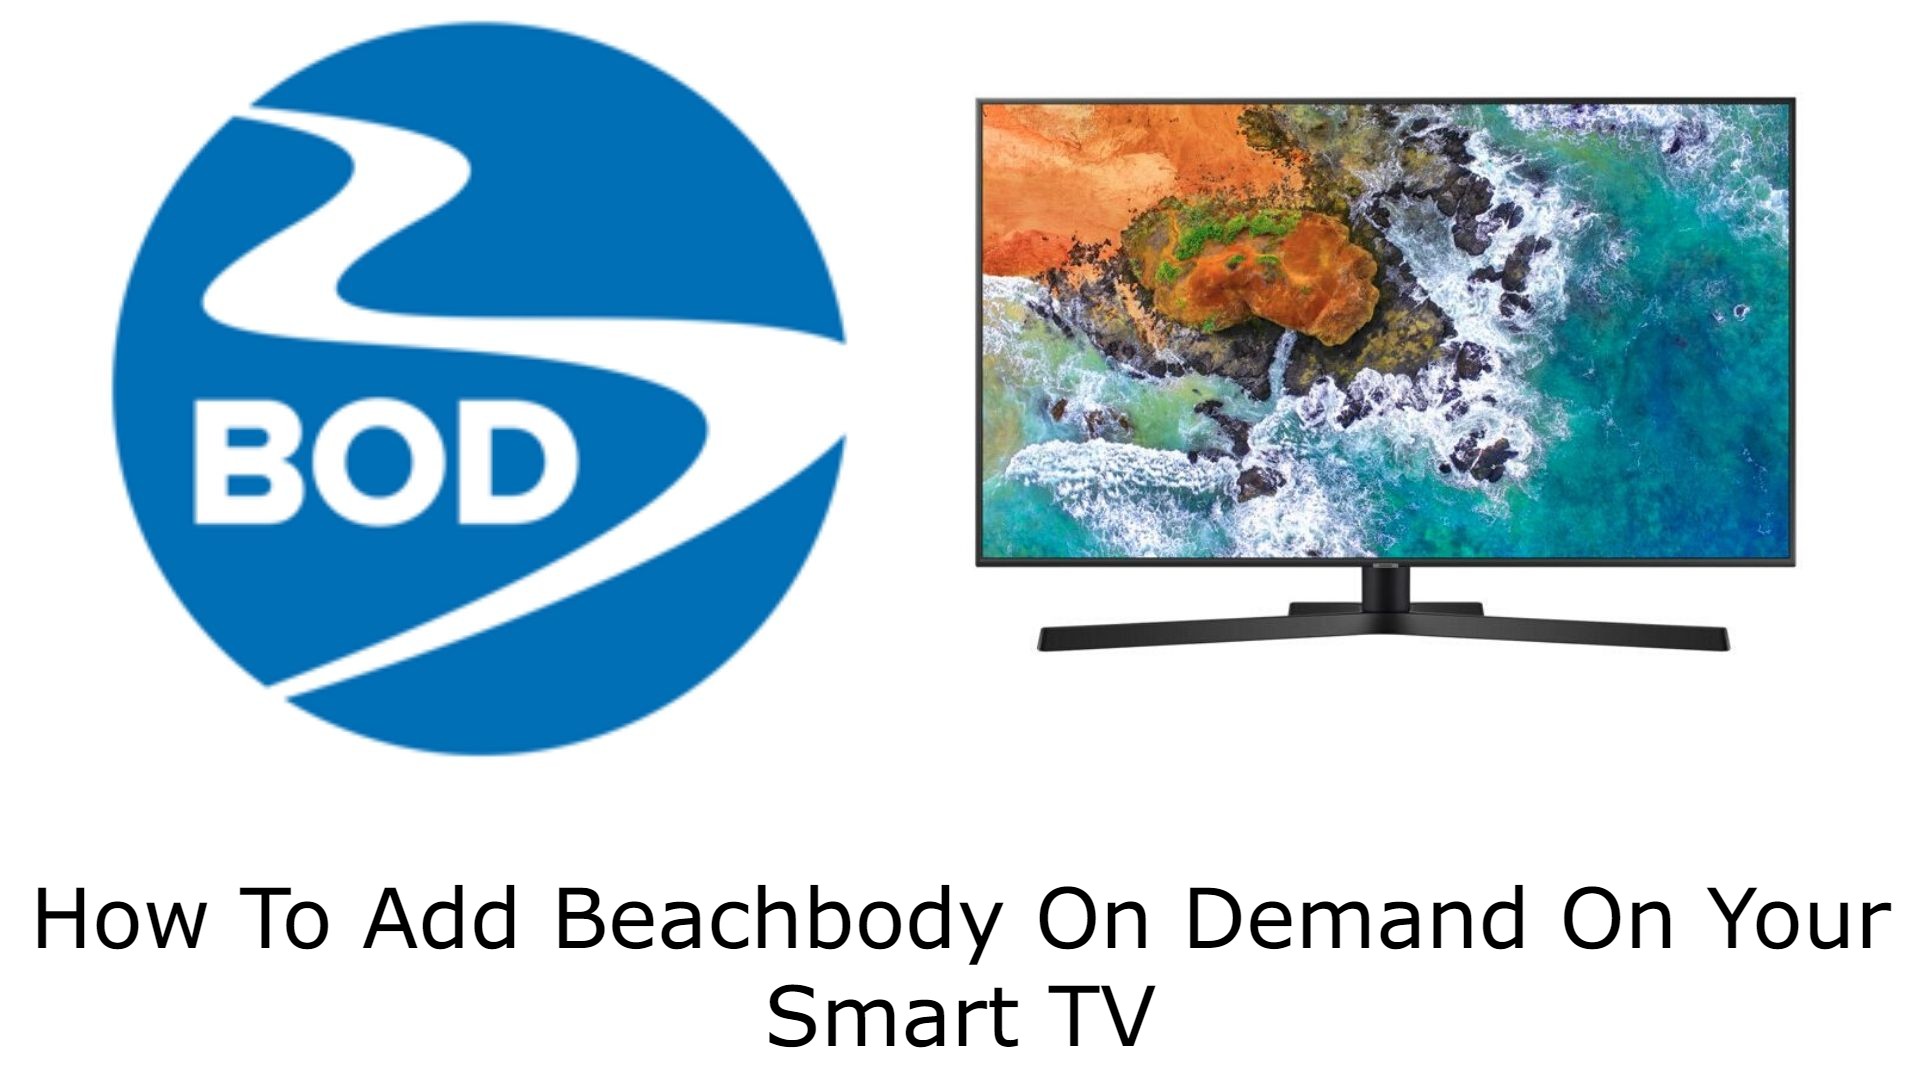 Beachbody On Demand On Your Smart TV